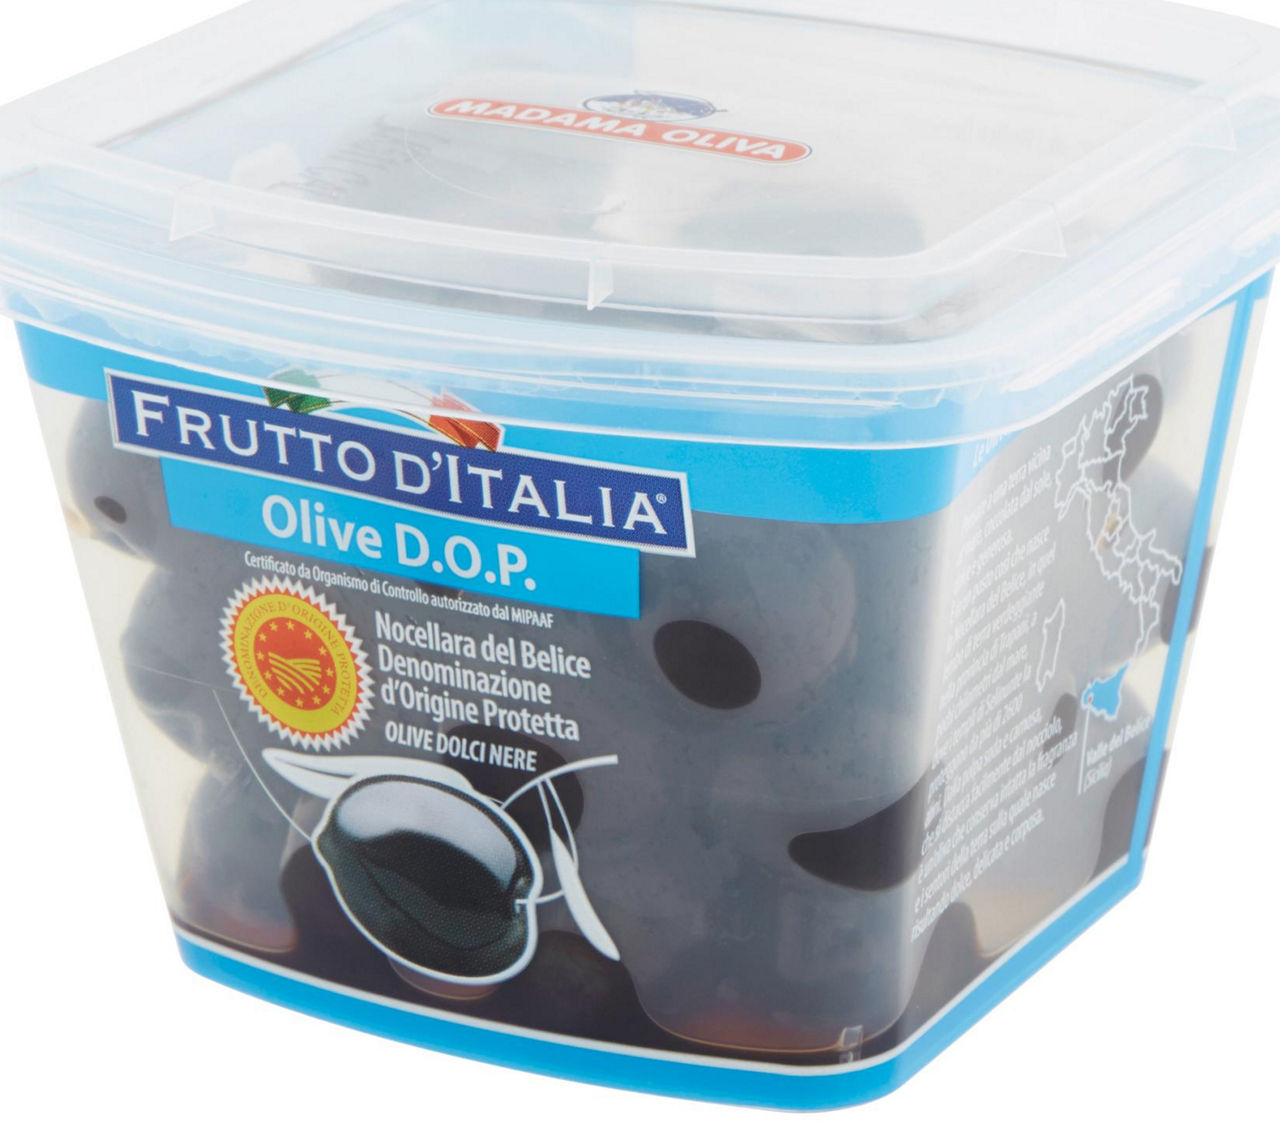 Olive dolci nere D.O.P. Nocellara del Belice Olive 250 g - 6